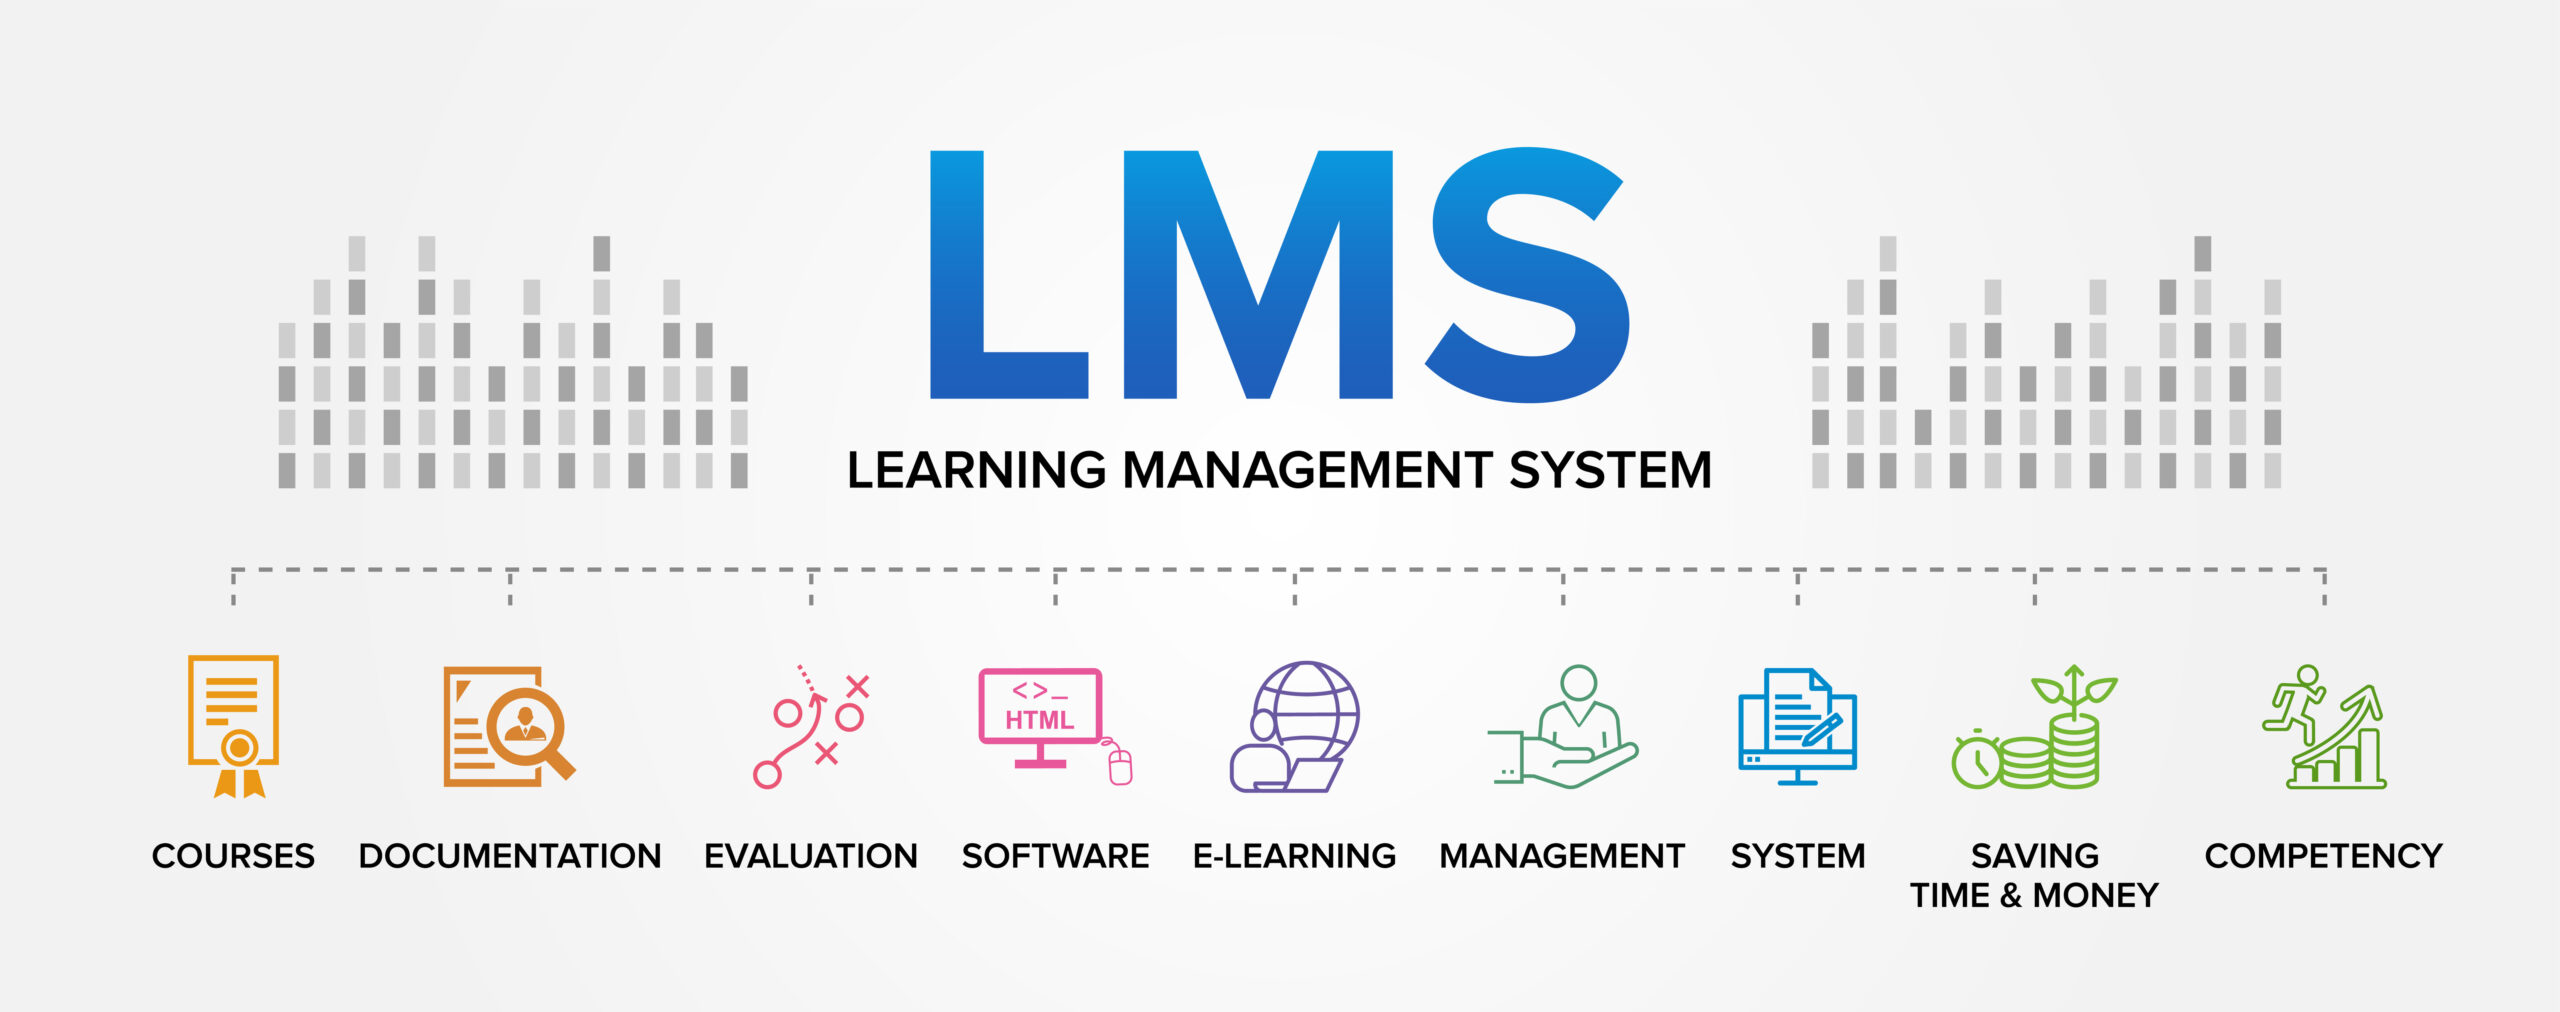 Enterprise Learning Management System ELMS infographic